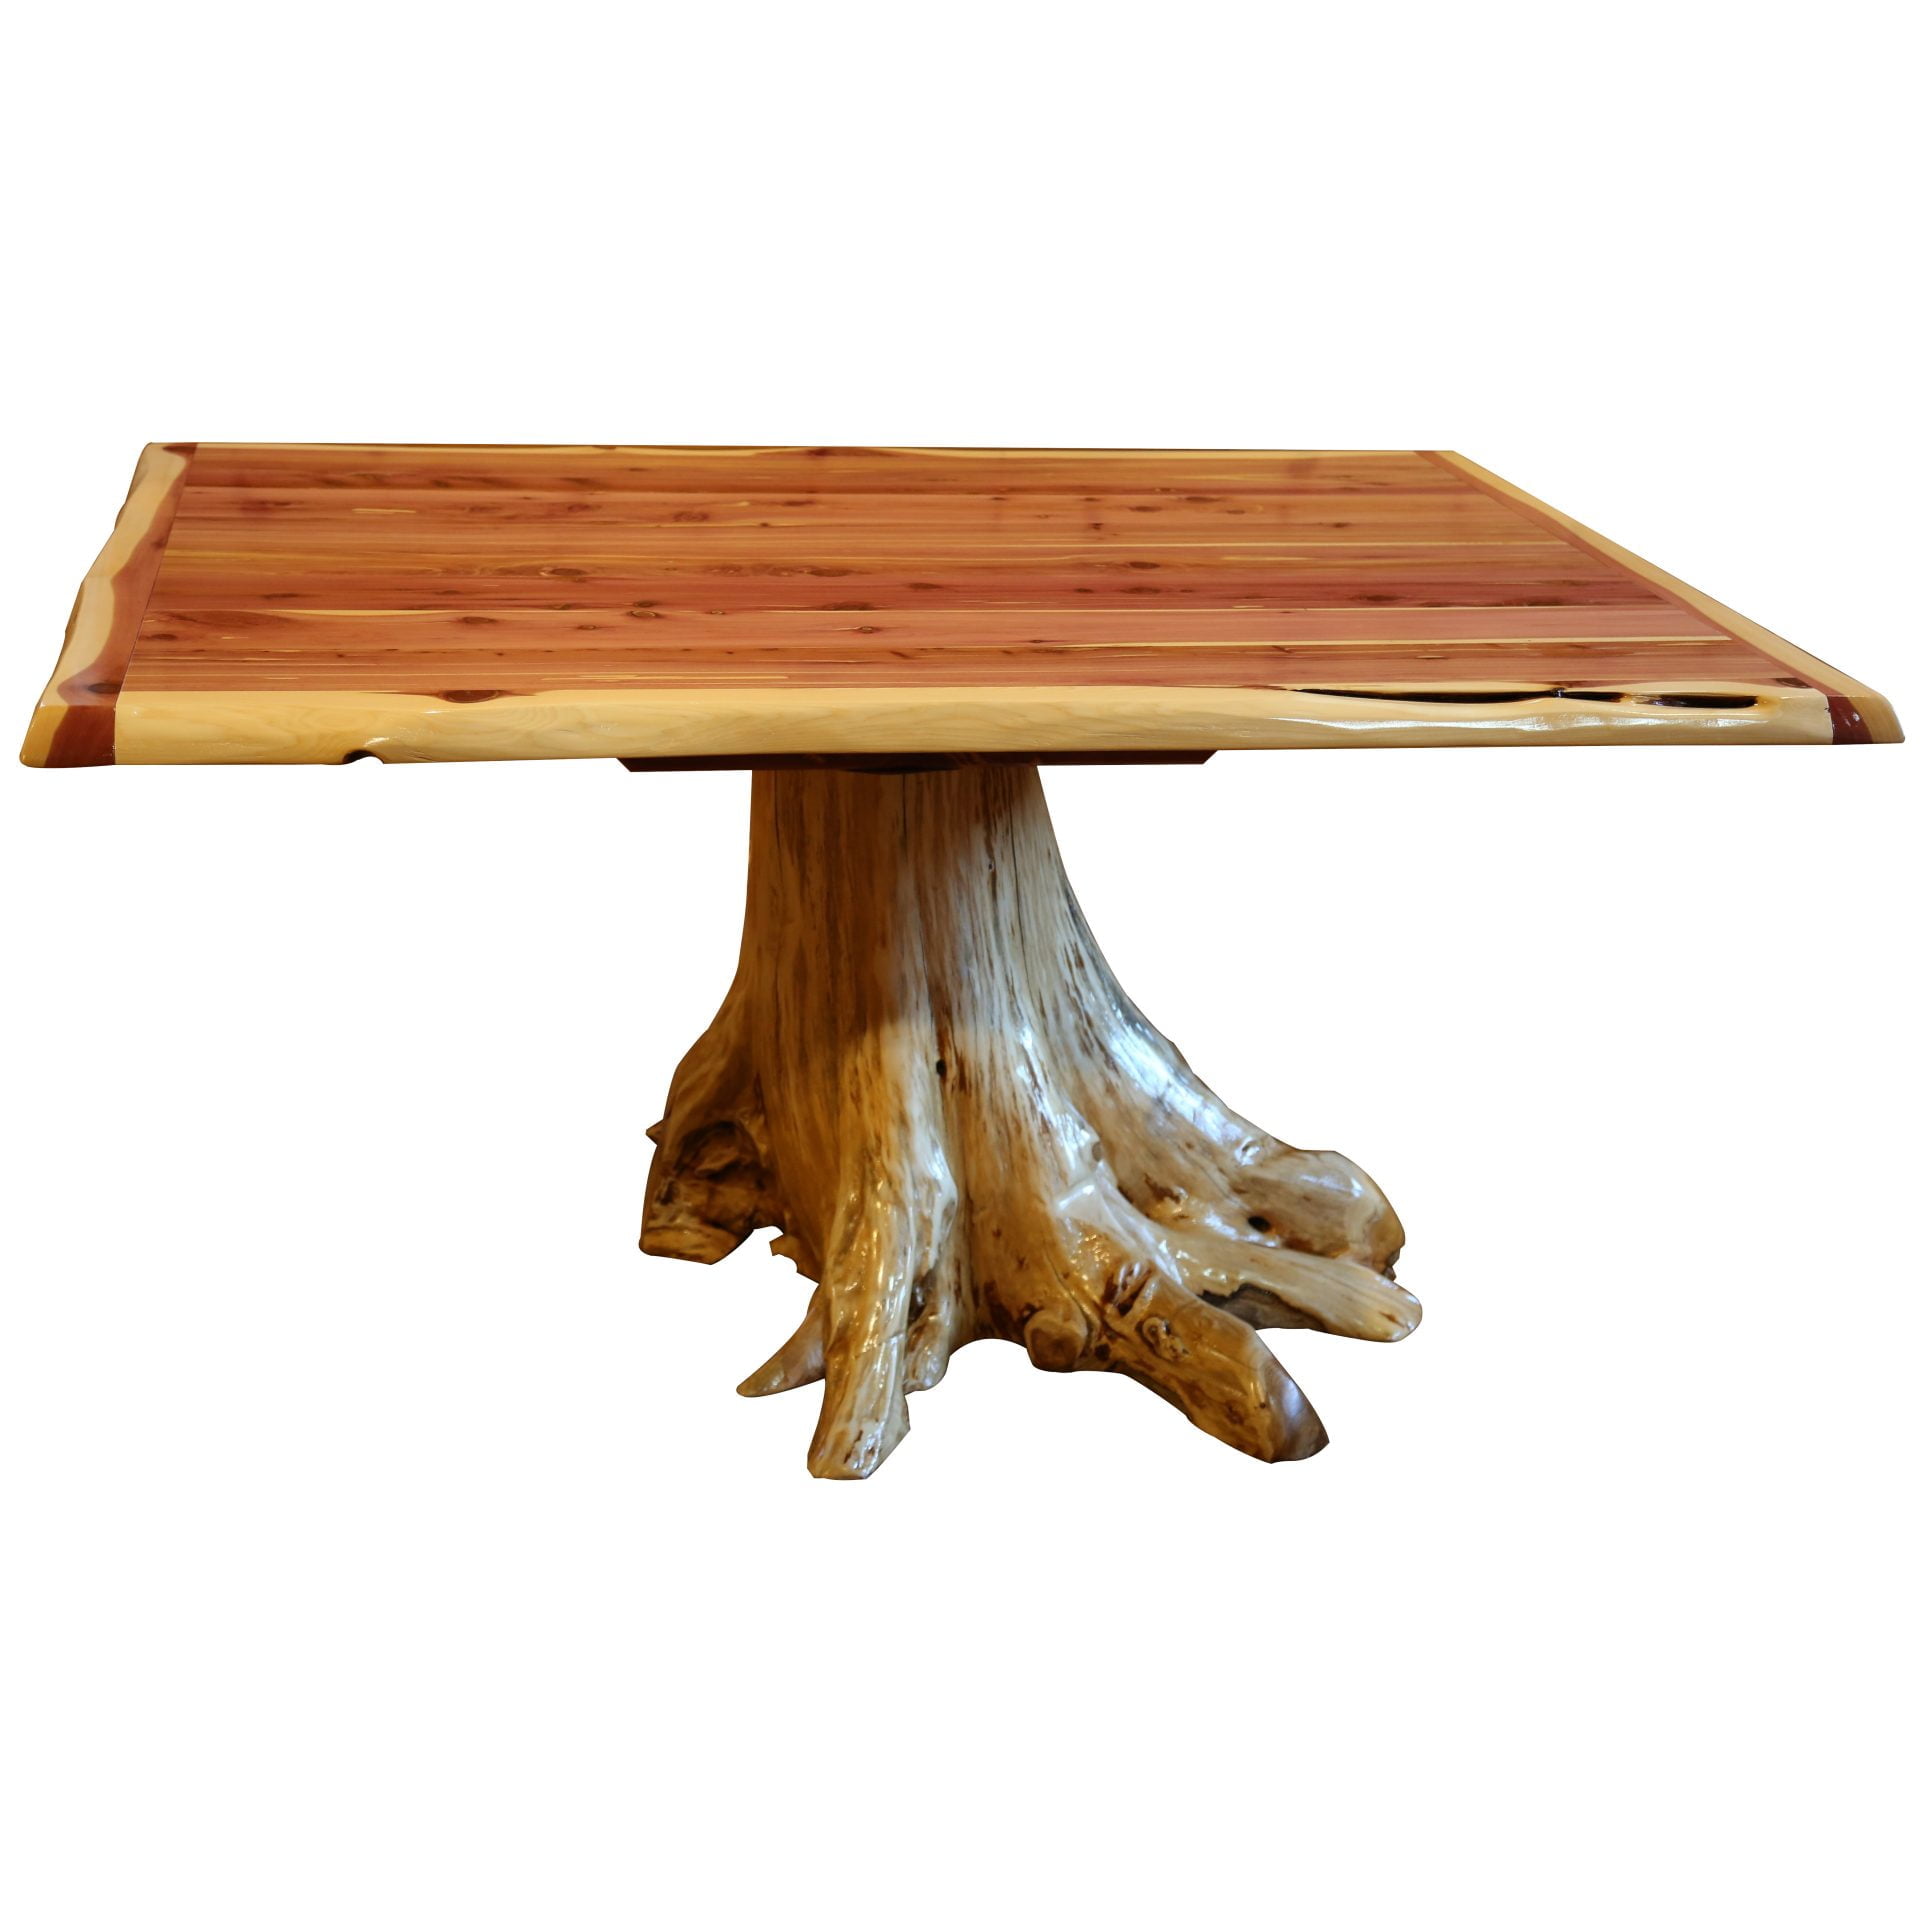 Rustic Red Cedar Log Stump Dining Table